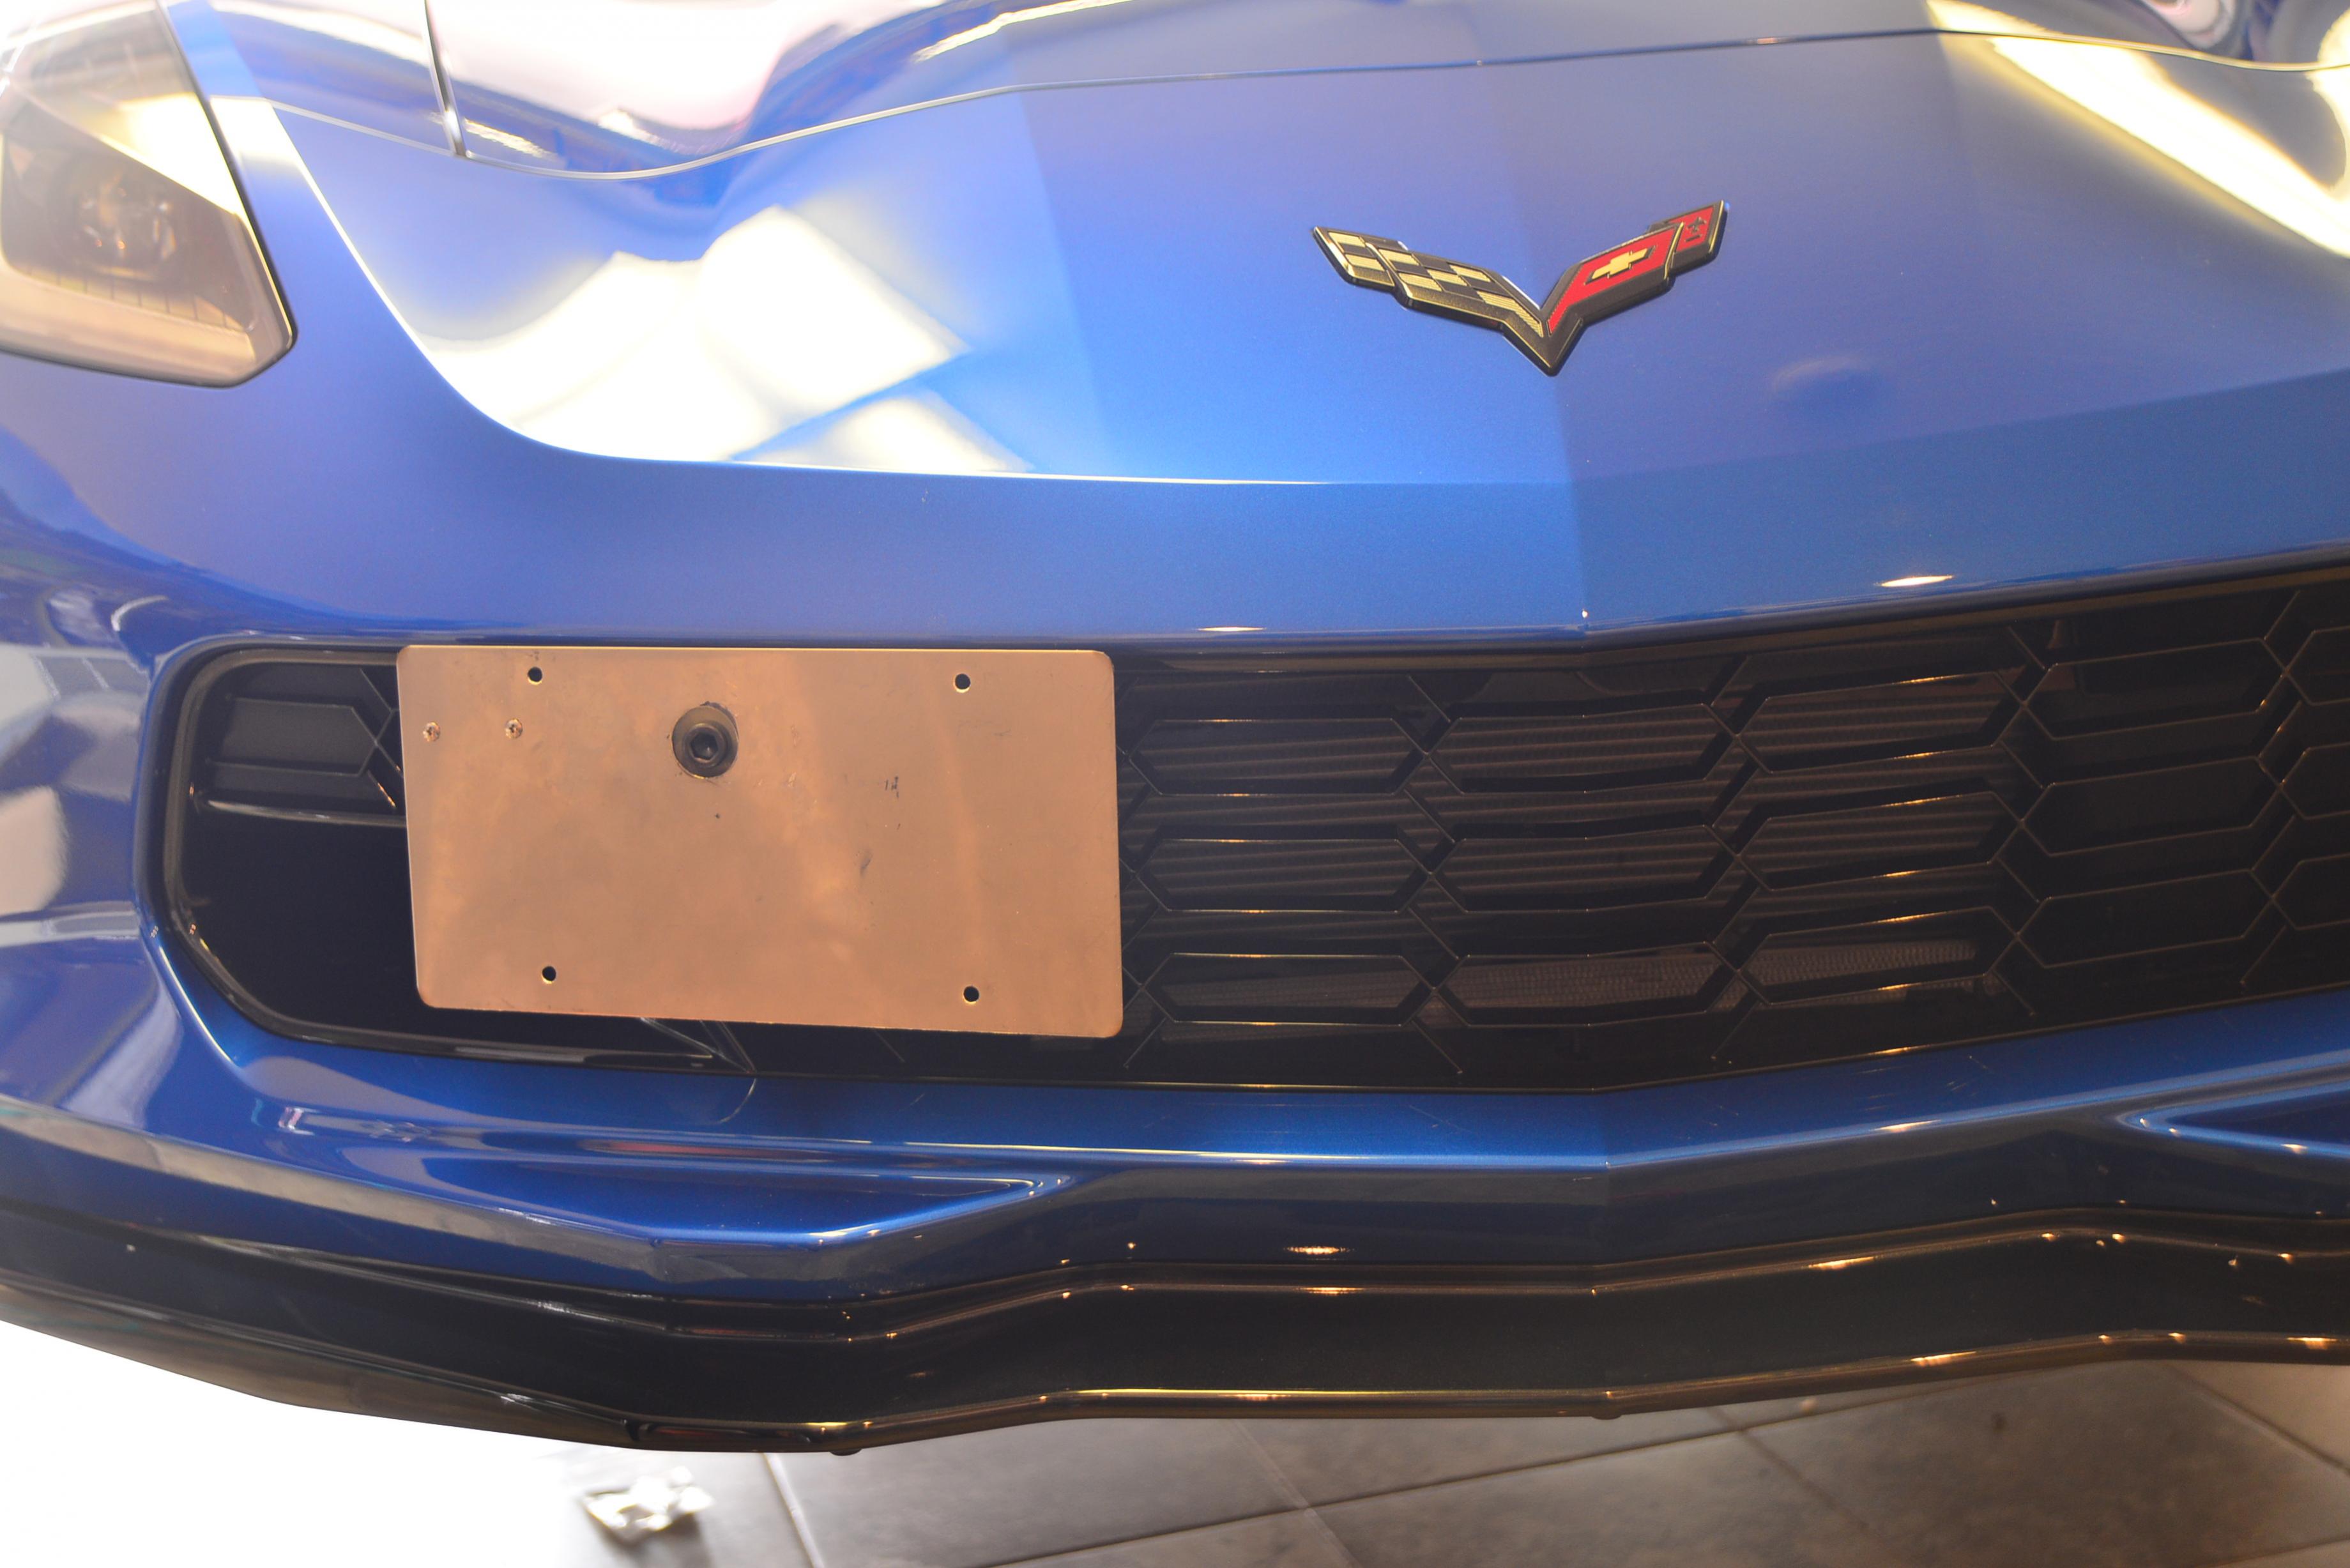 Front license plate holder for tow hook receiver - CorvetteForum -  Chevrolet Corvette Forum Discussion